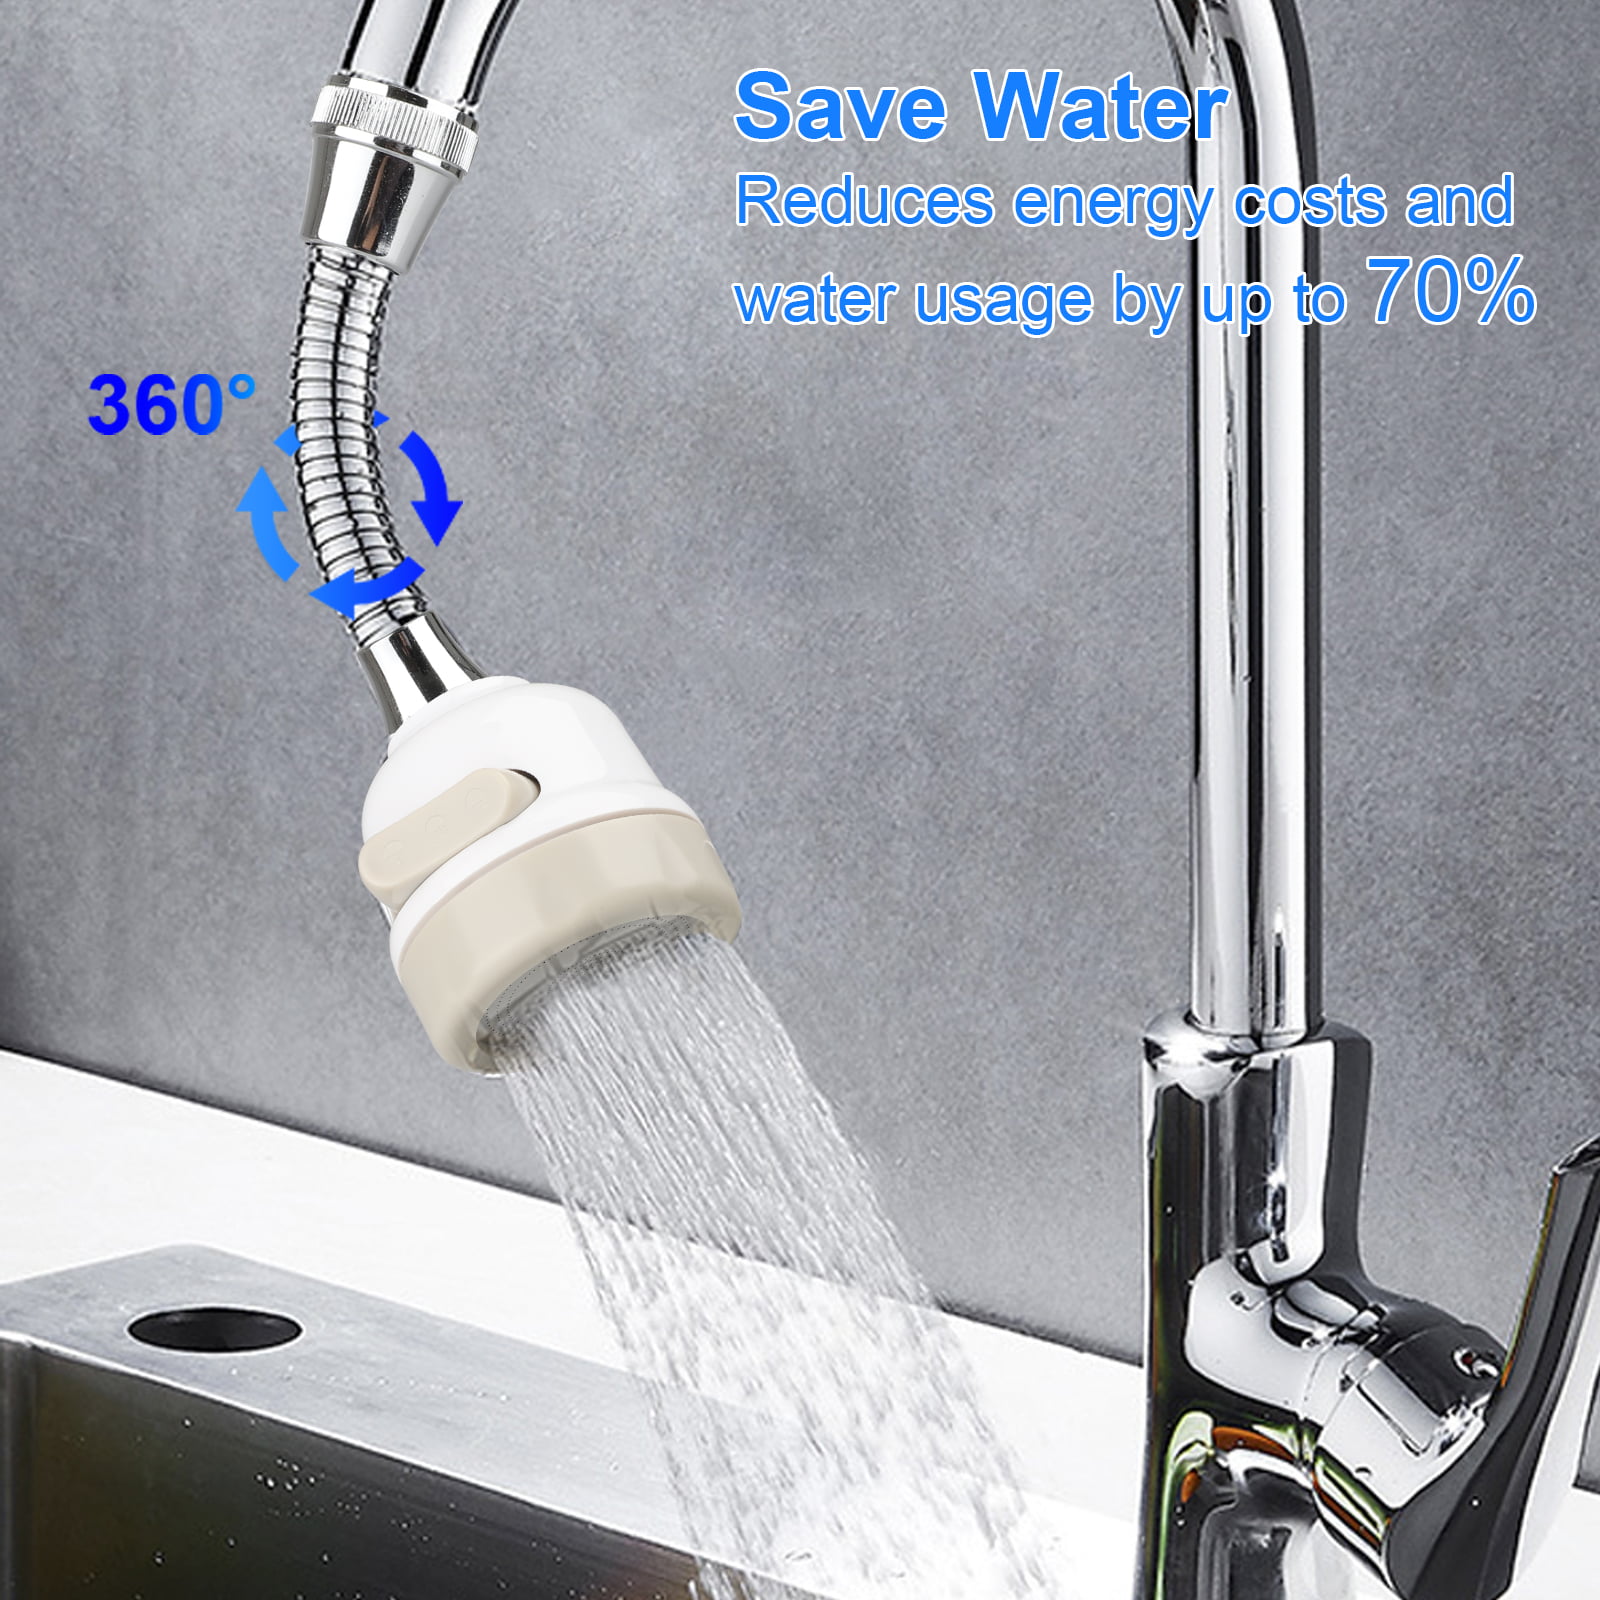 360° Rotate Faucet Filter Tap Diffuser Kitchen Accessories Gadget Bathroom JP 